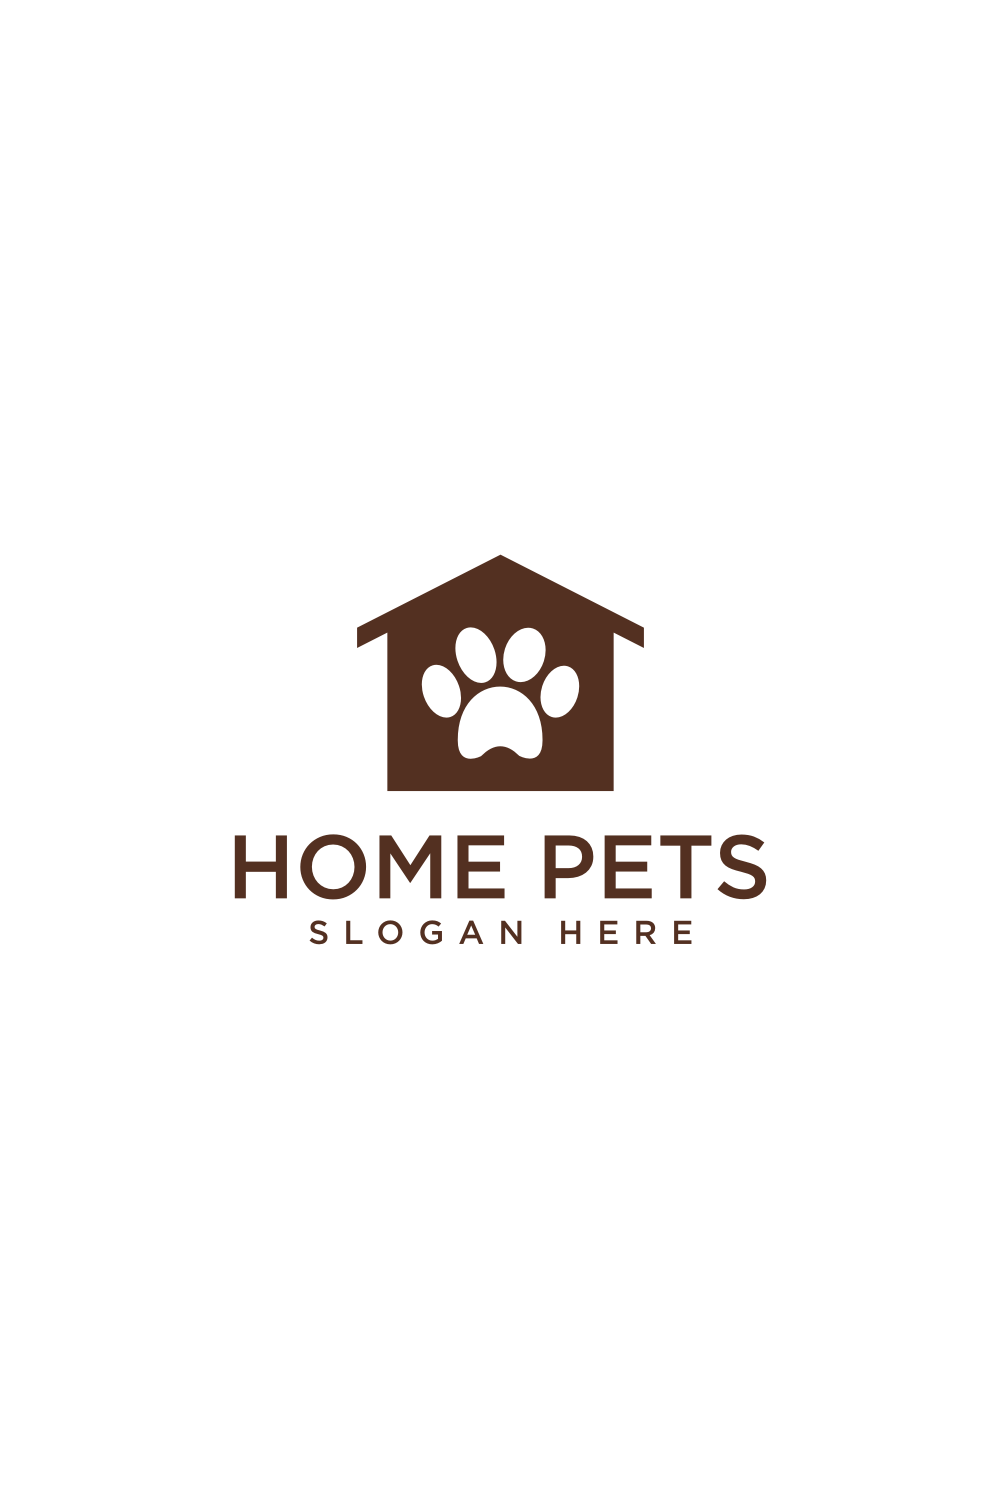 Pets Home Logo Vector Design Pinterest preview.